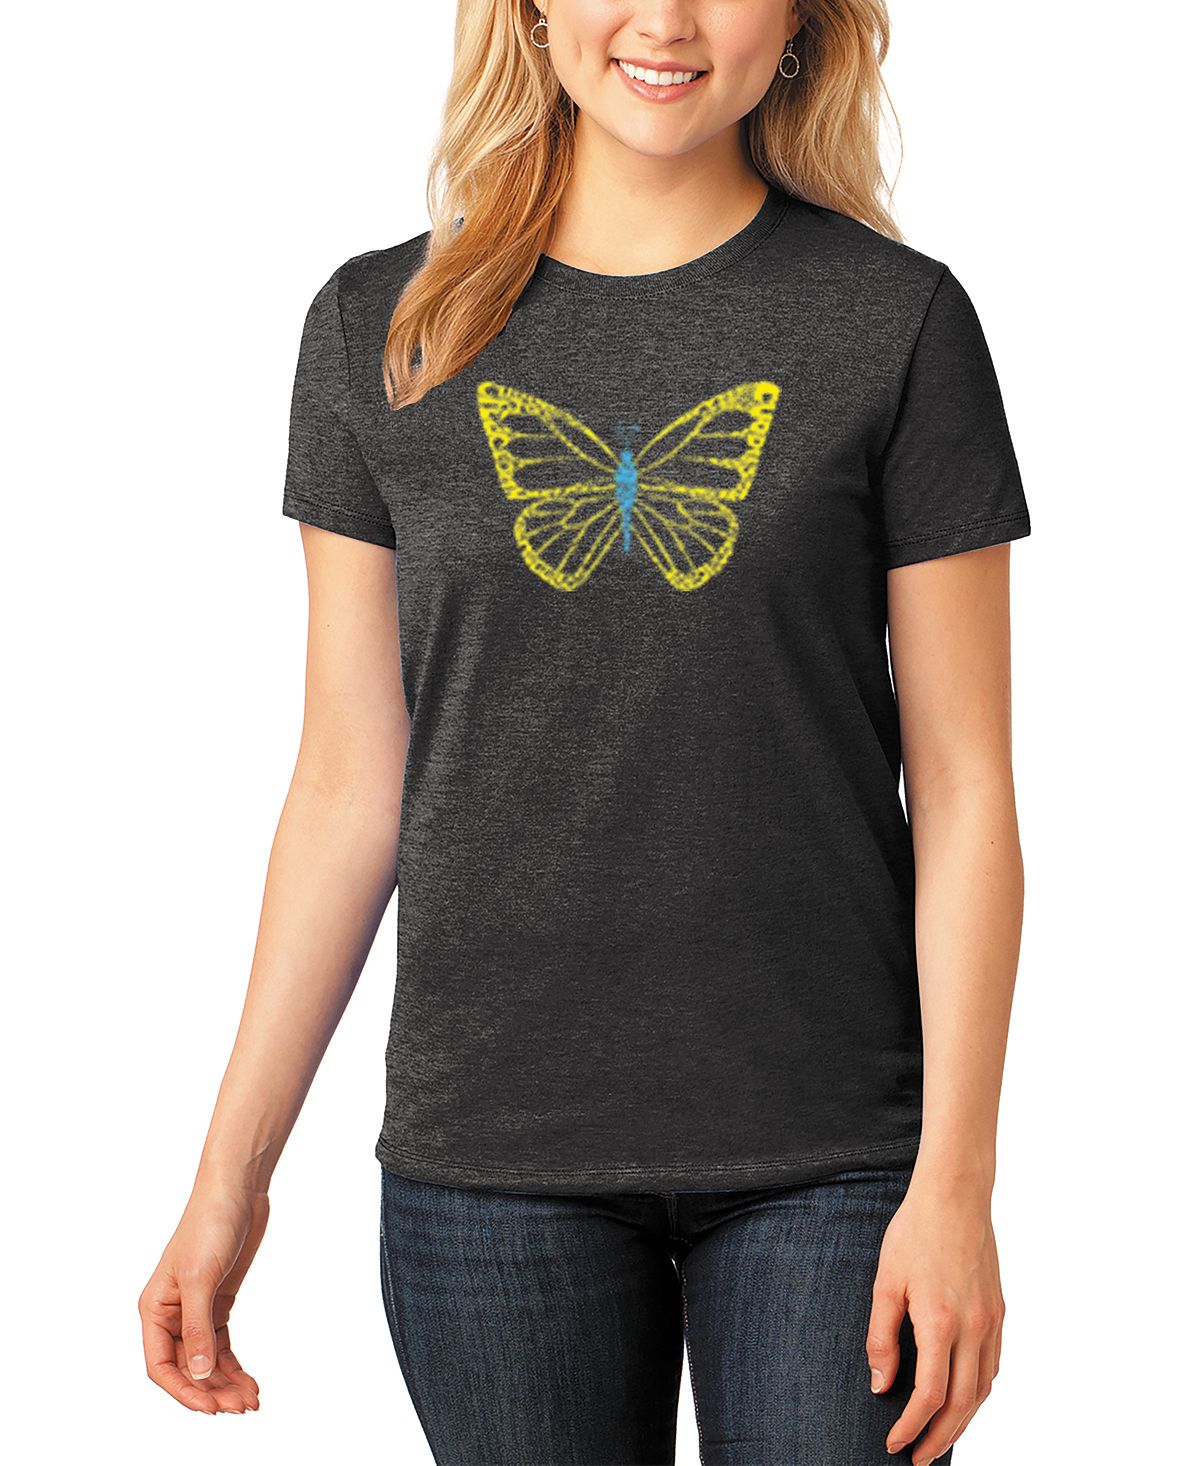 Женская футболка premium blend butterfly word art LA Pop Art, черный женская футболка с изображением санта клауса premium blend word art la pop art черный